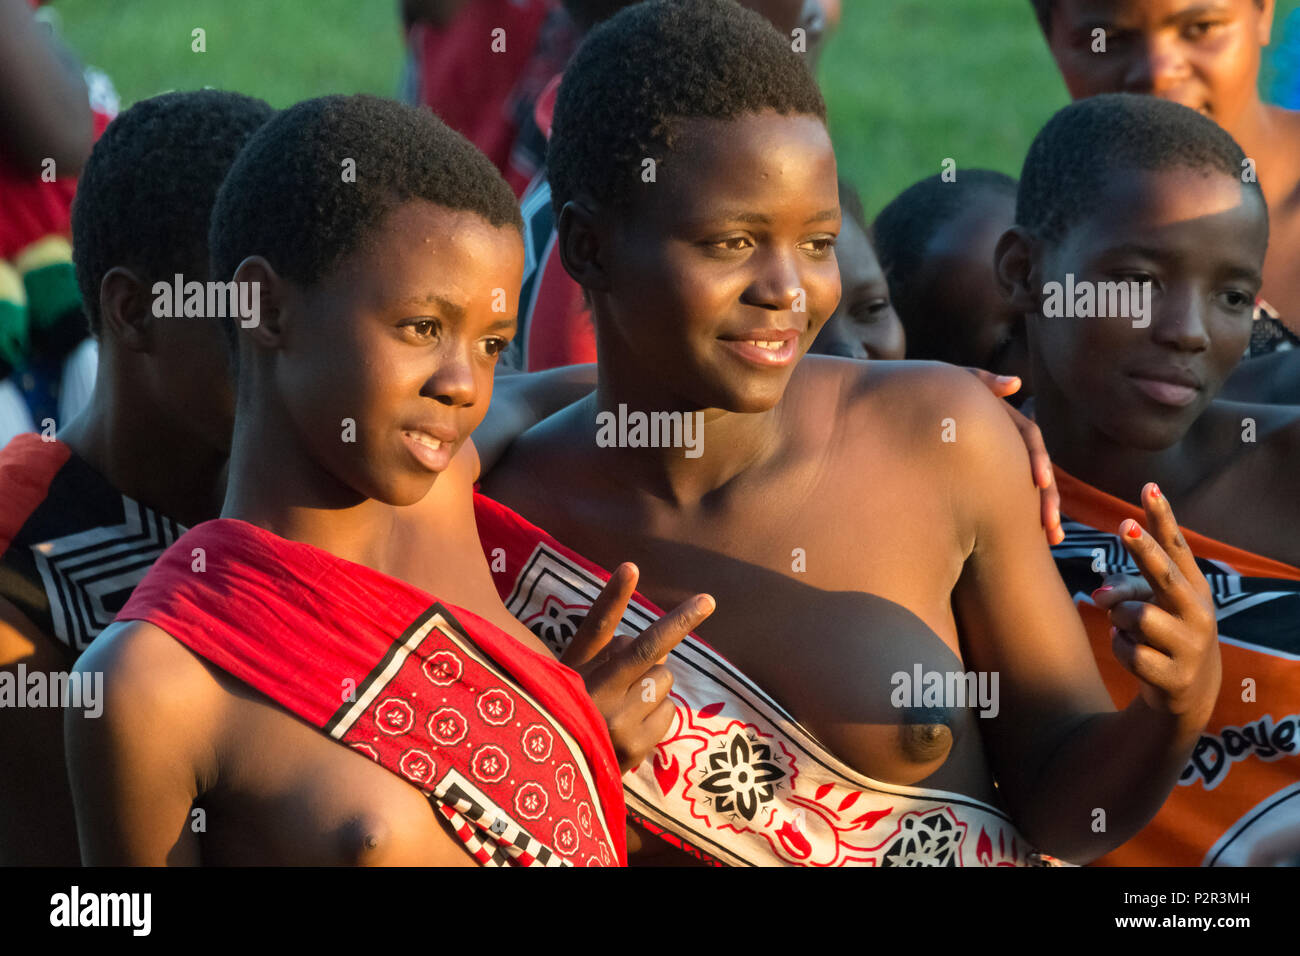 Woman Swaziland Traditional Culture Stockfotos Und Bilder Kaufen Alamy